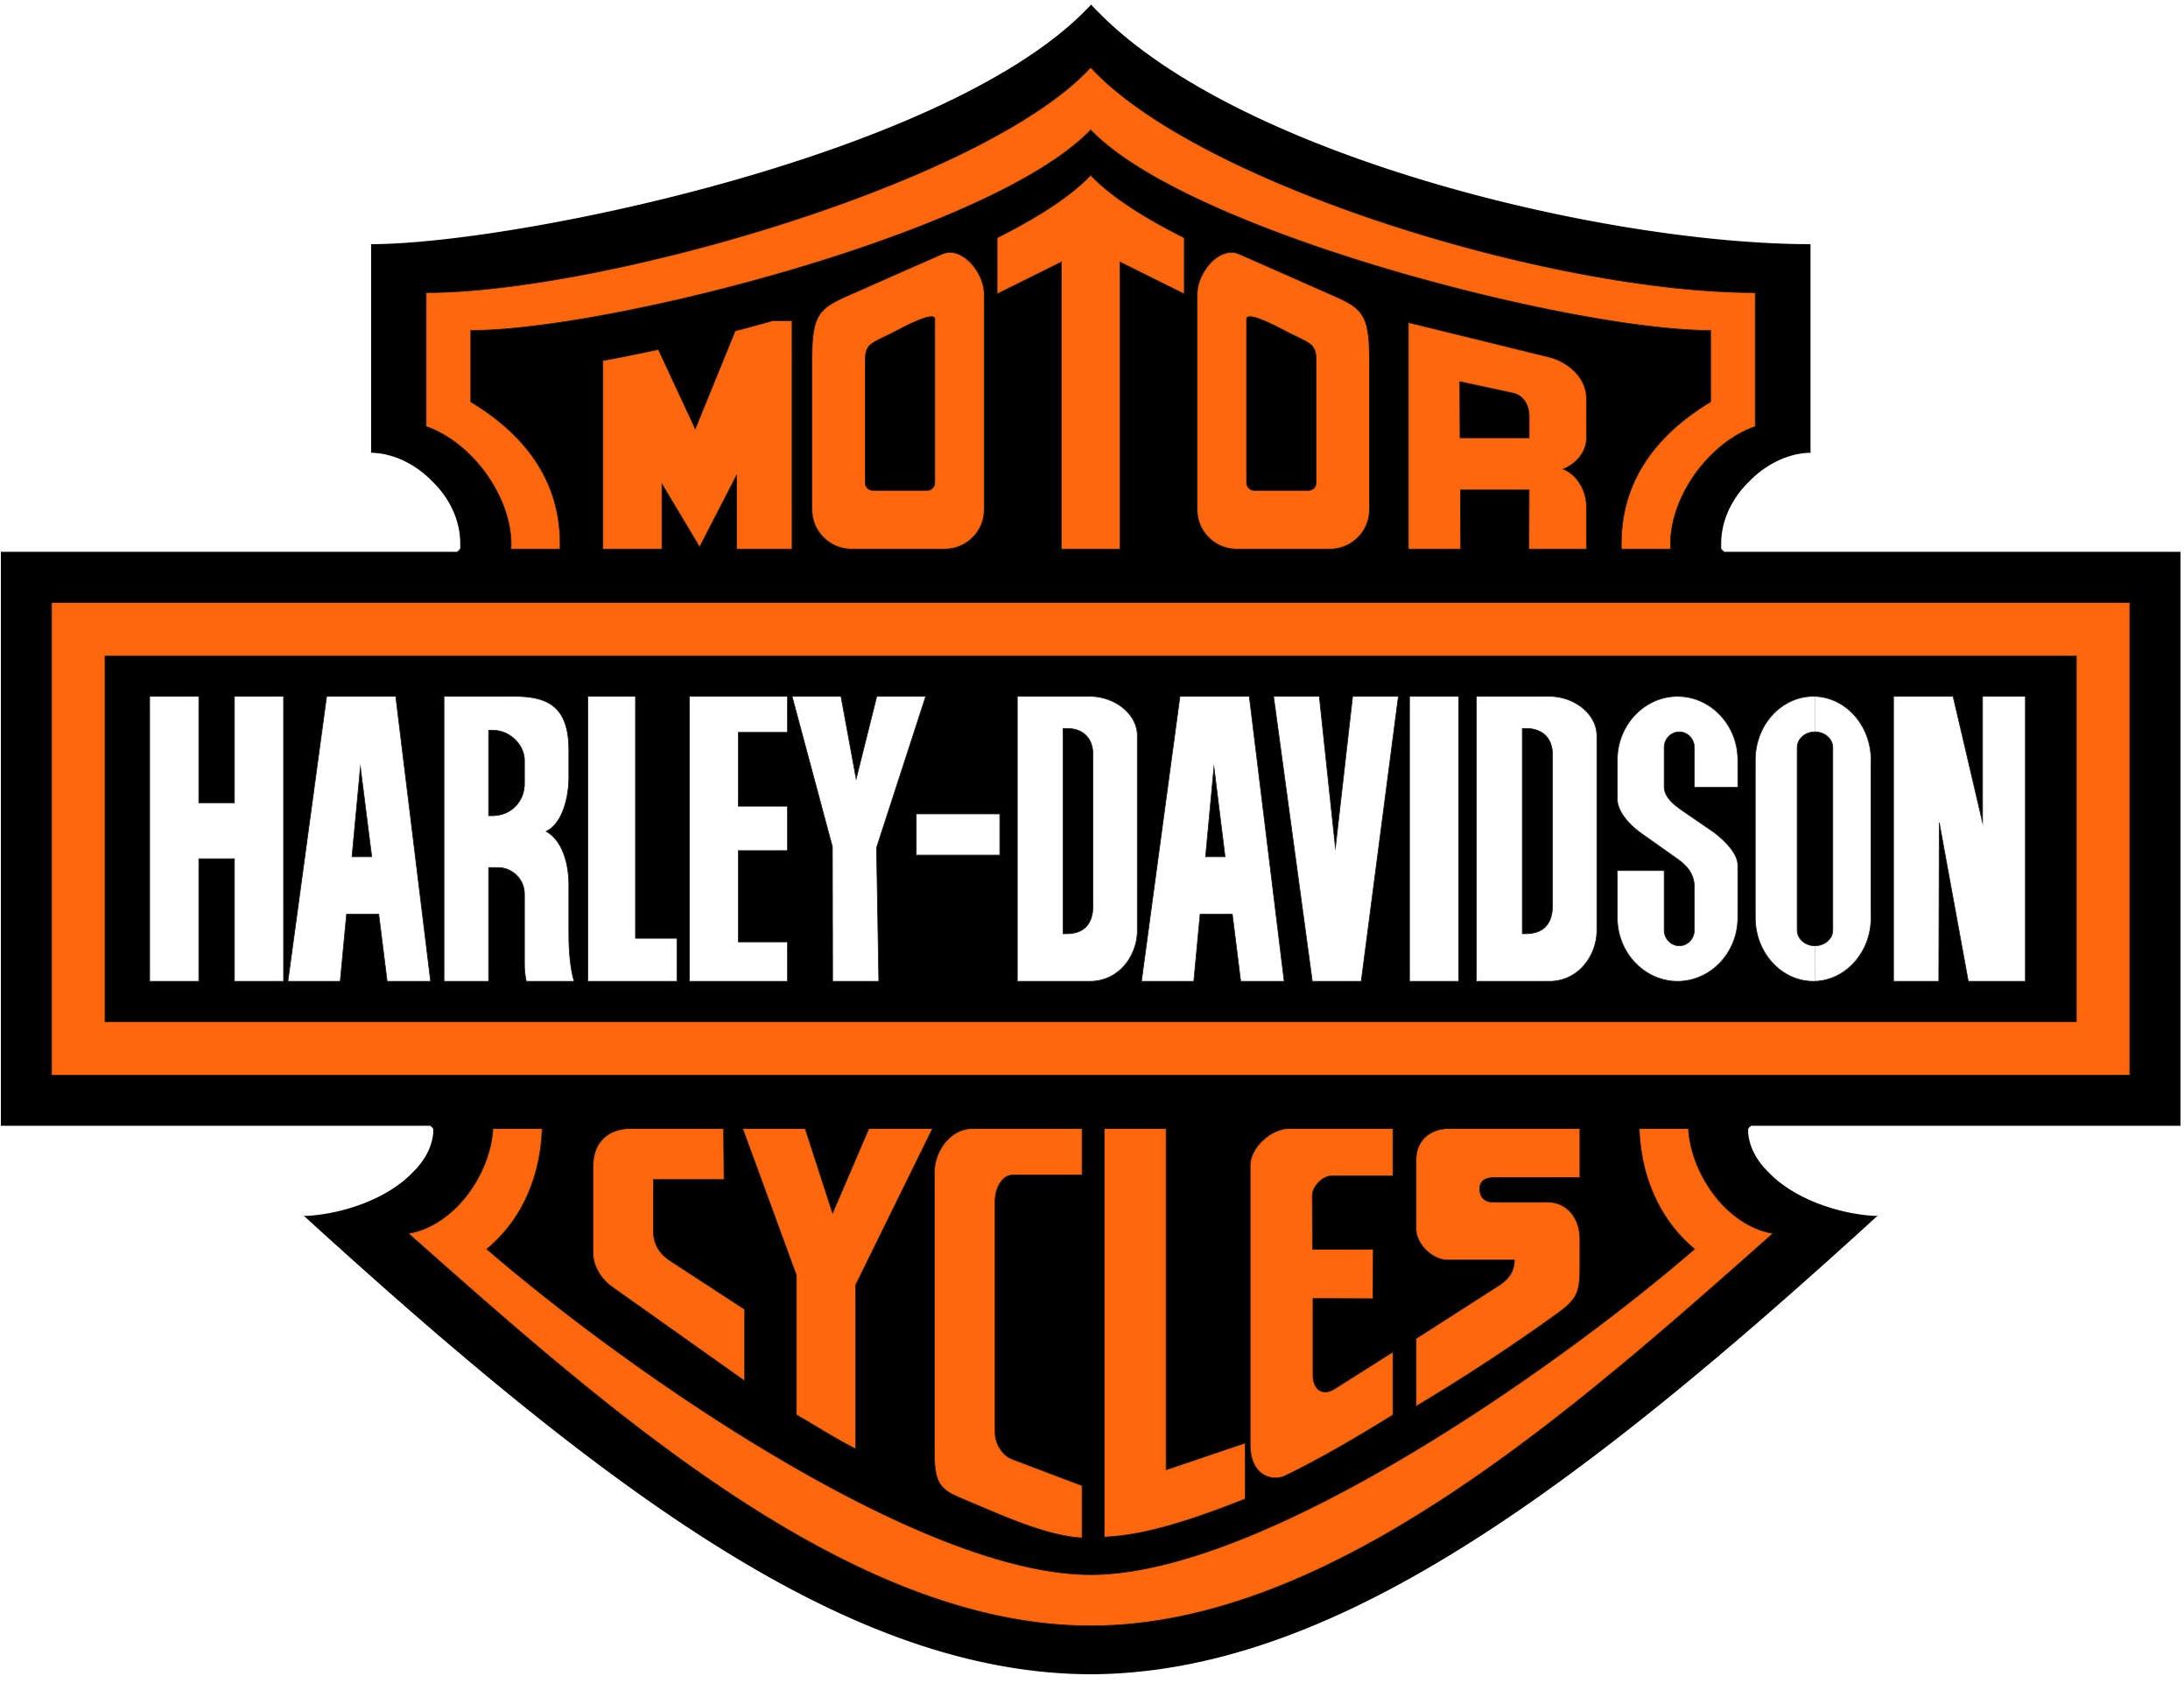 2 Sticker autocollant Harley Davidson N&B